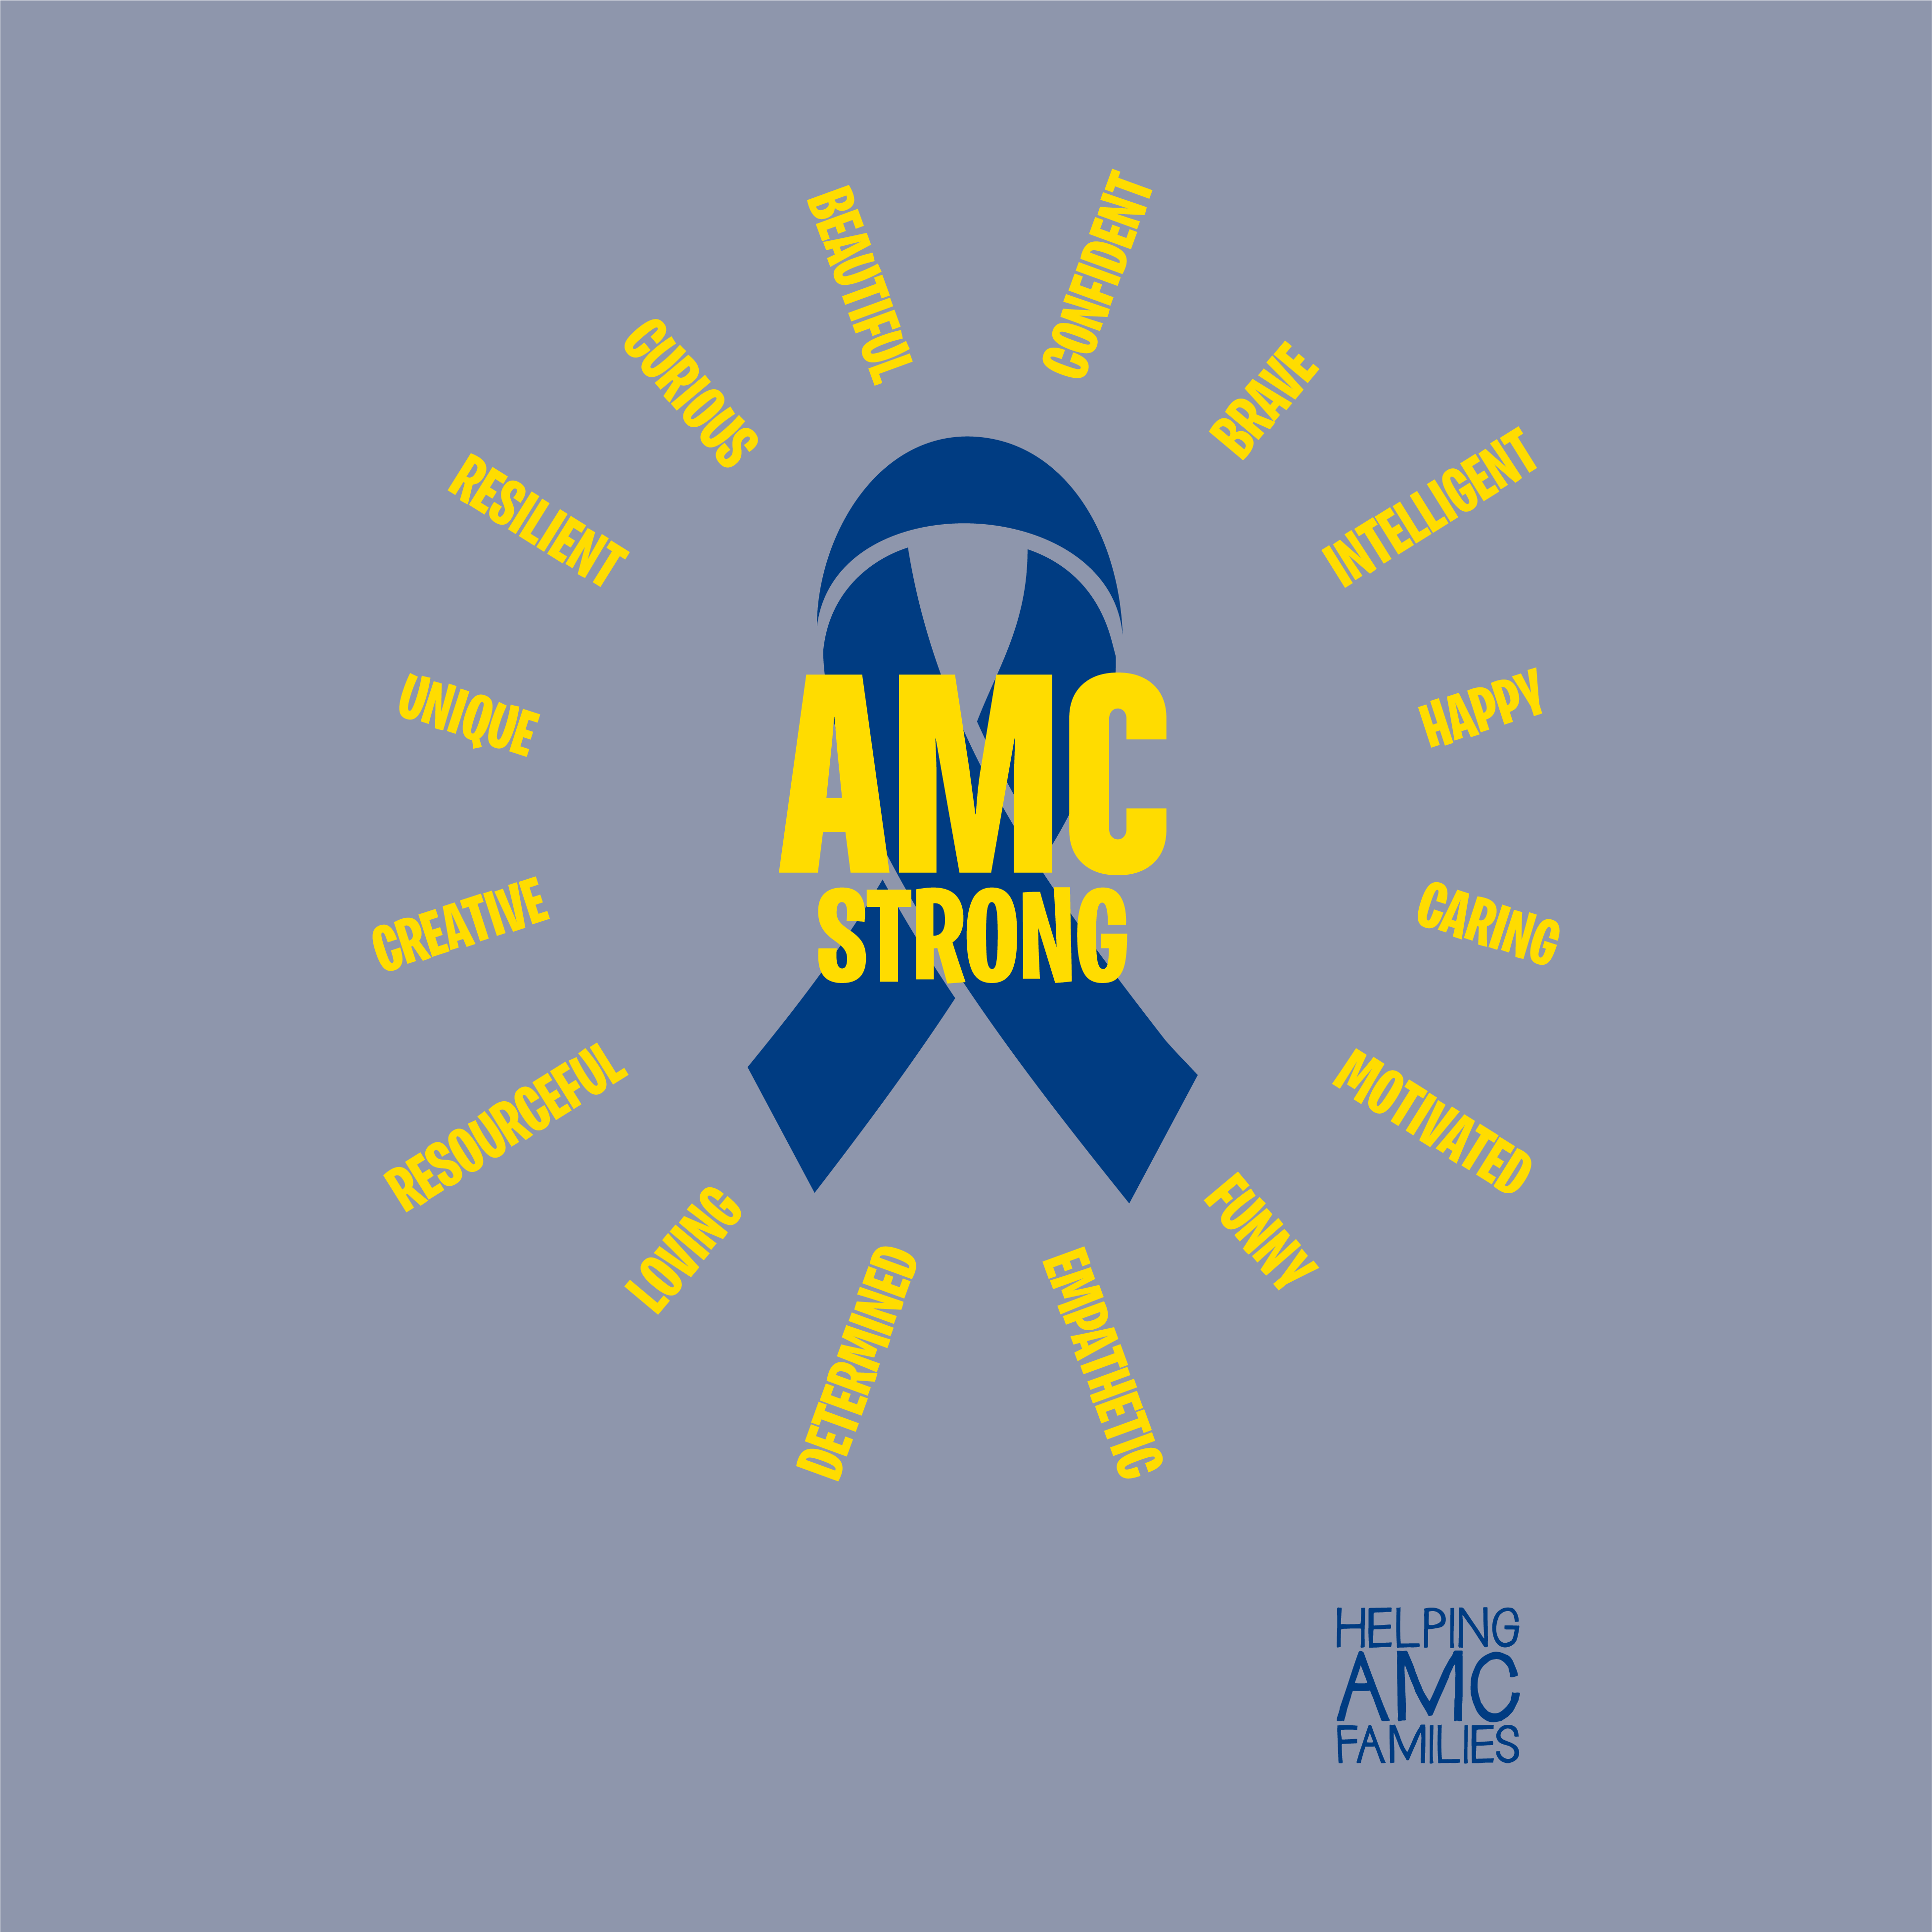 AMCFamily - AMC Strong AMCer attributes - T-SHIRT shirt design - zoomed